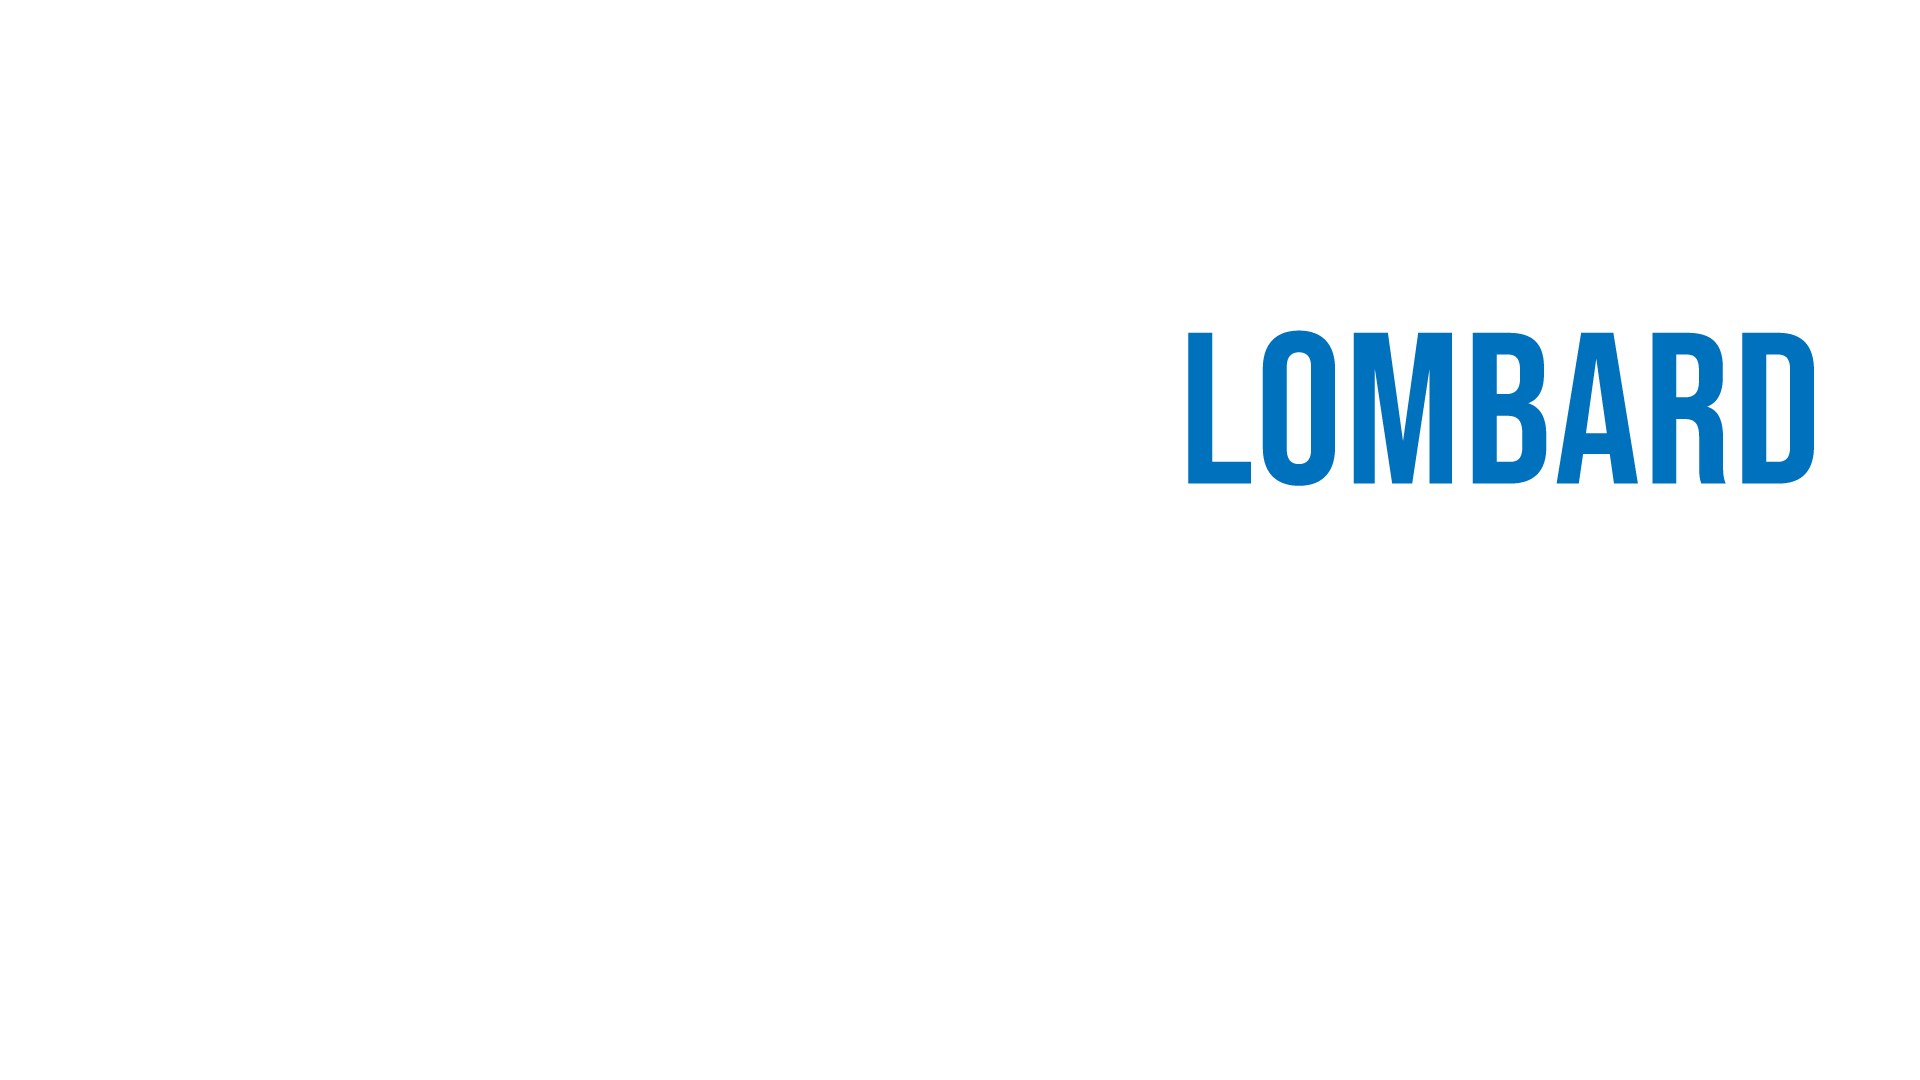 Chris Lombard